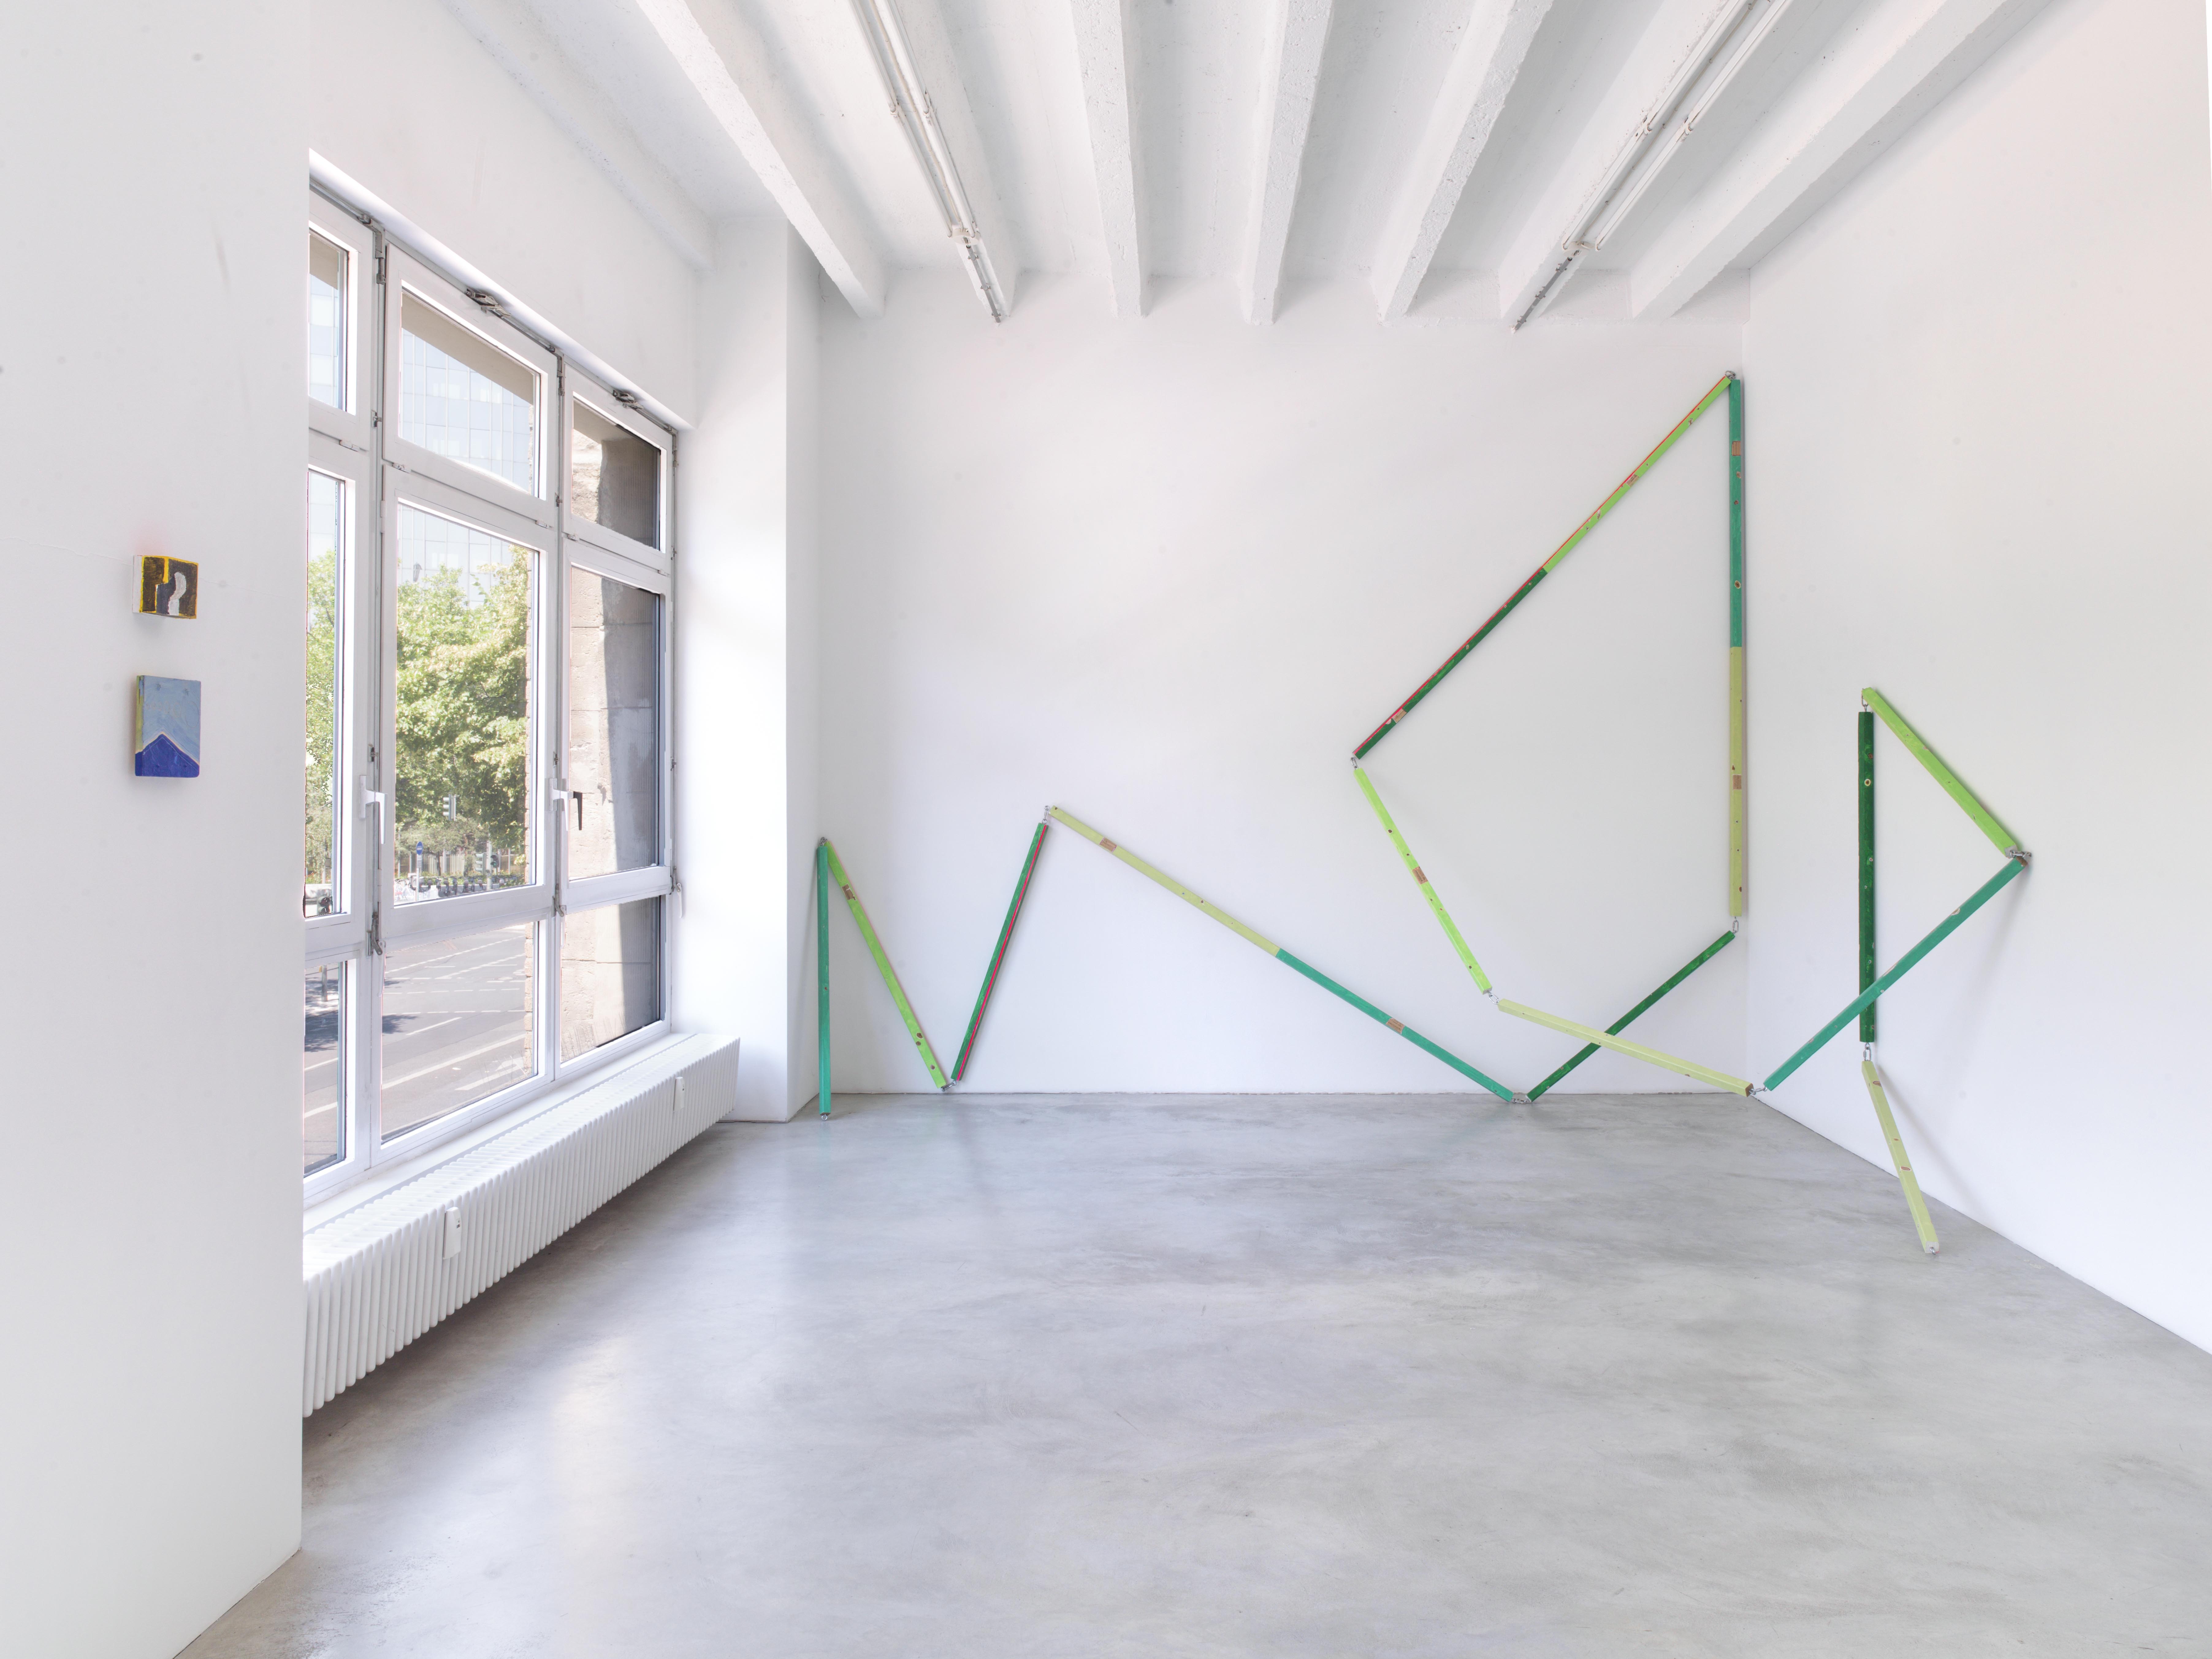 Cordy Ryman installation view courtesy of Konrad Fischer Gallery.